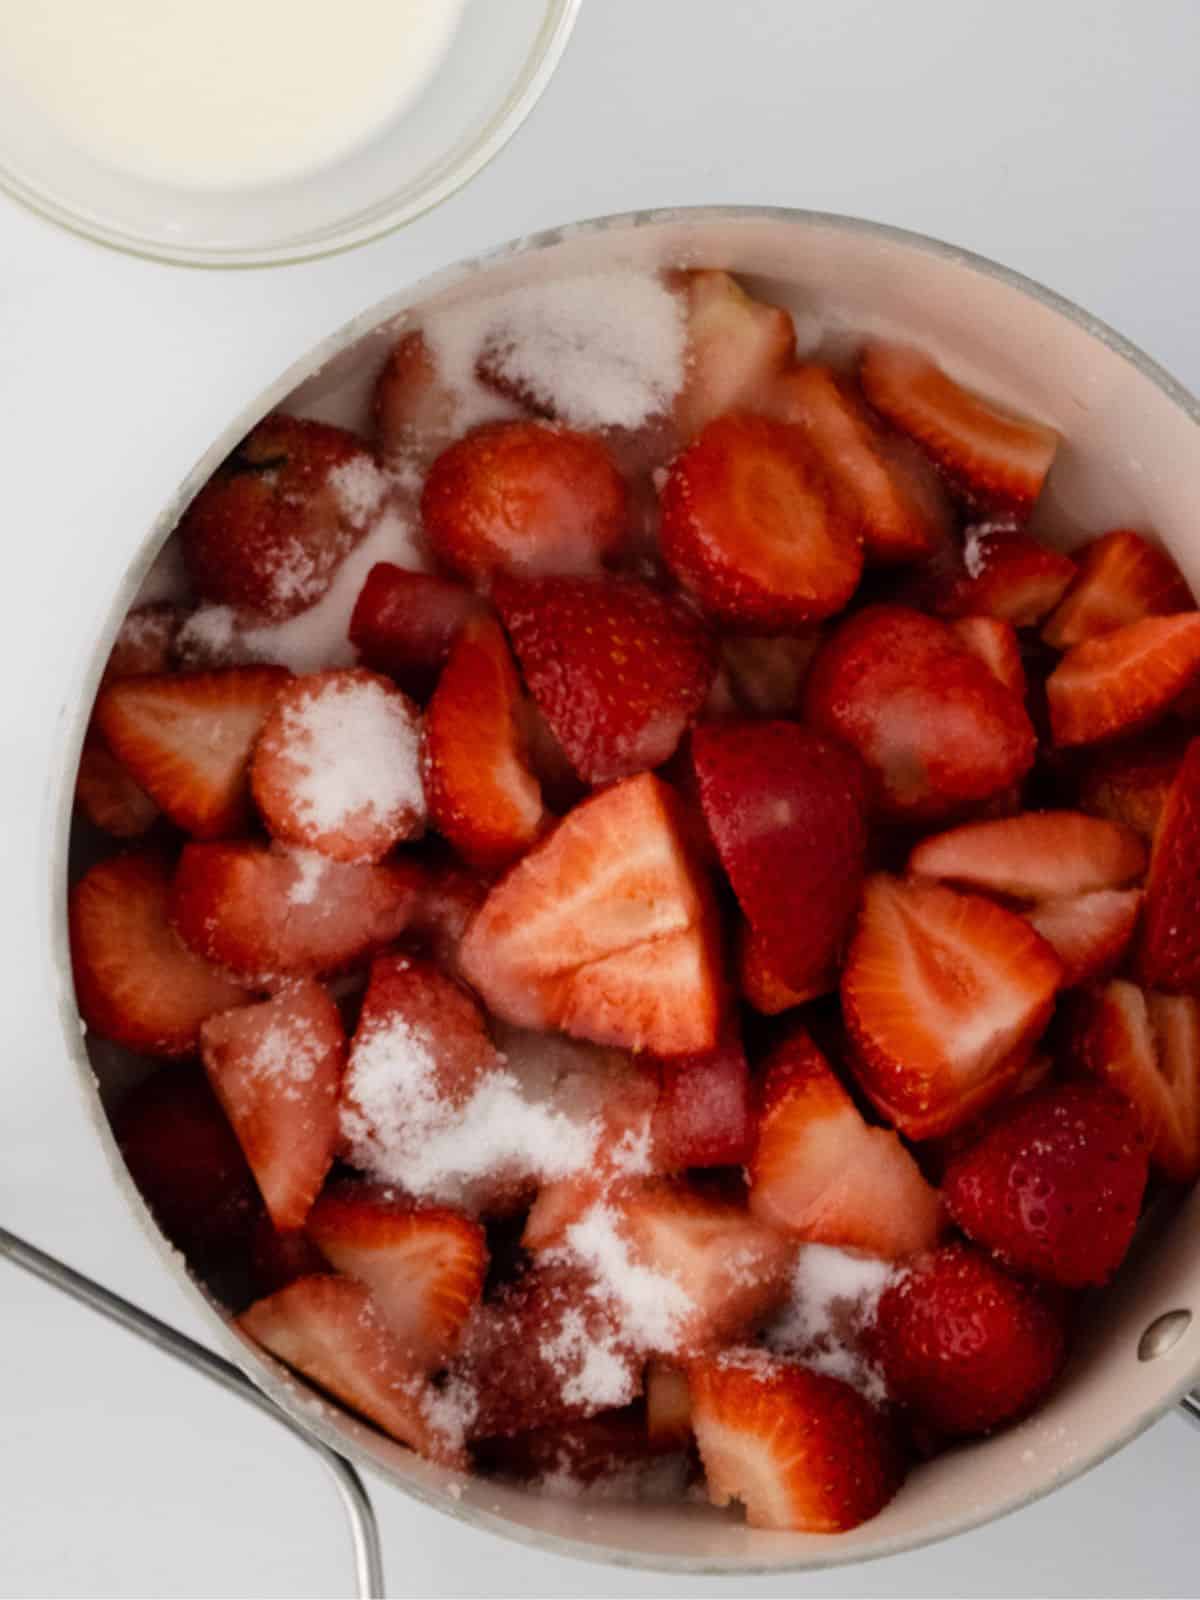 Add sugar and begin to mash strawberries.